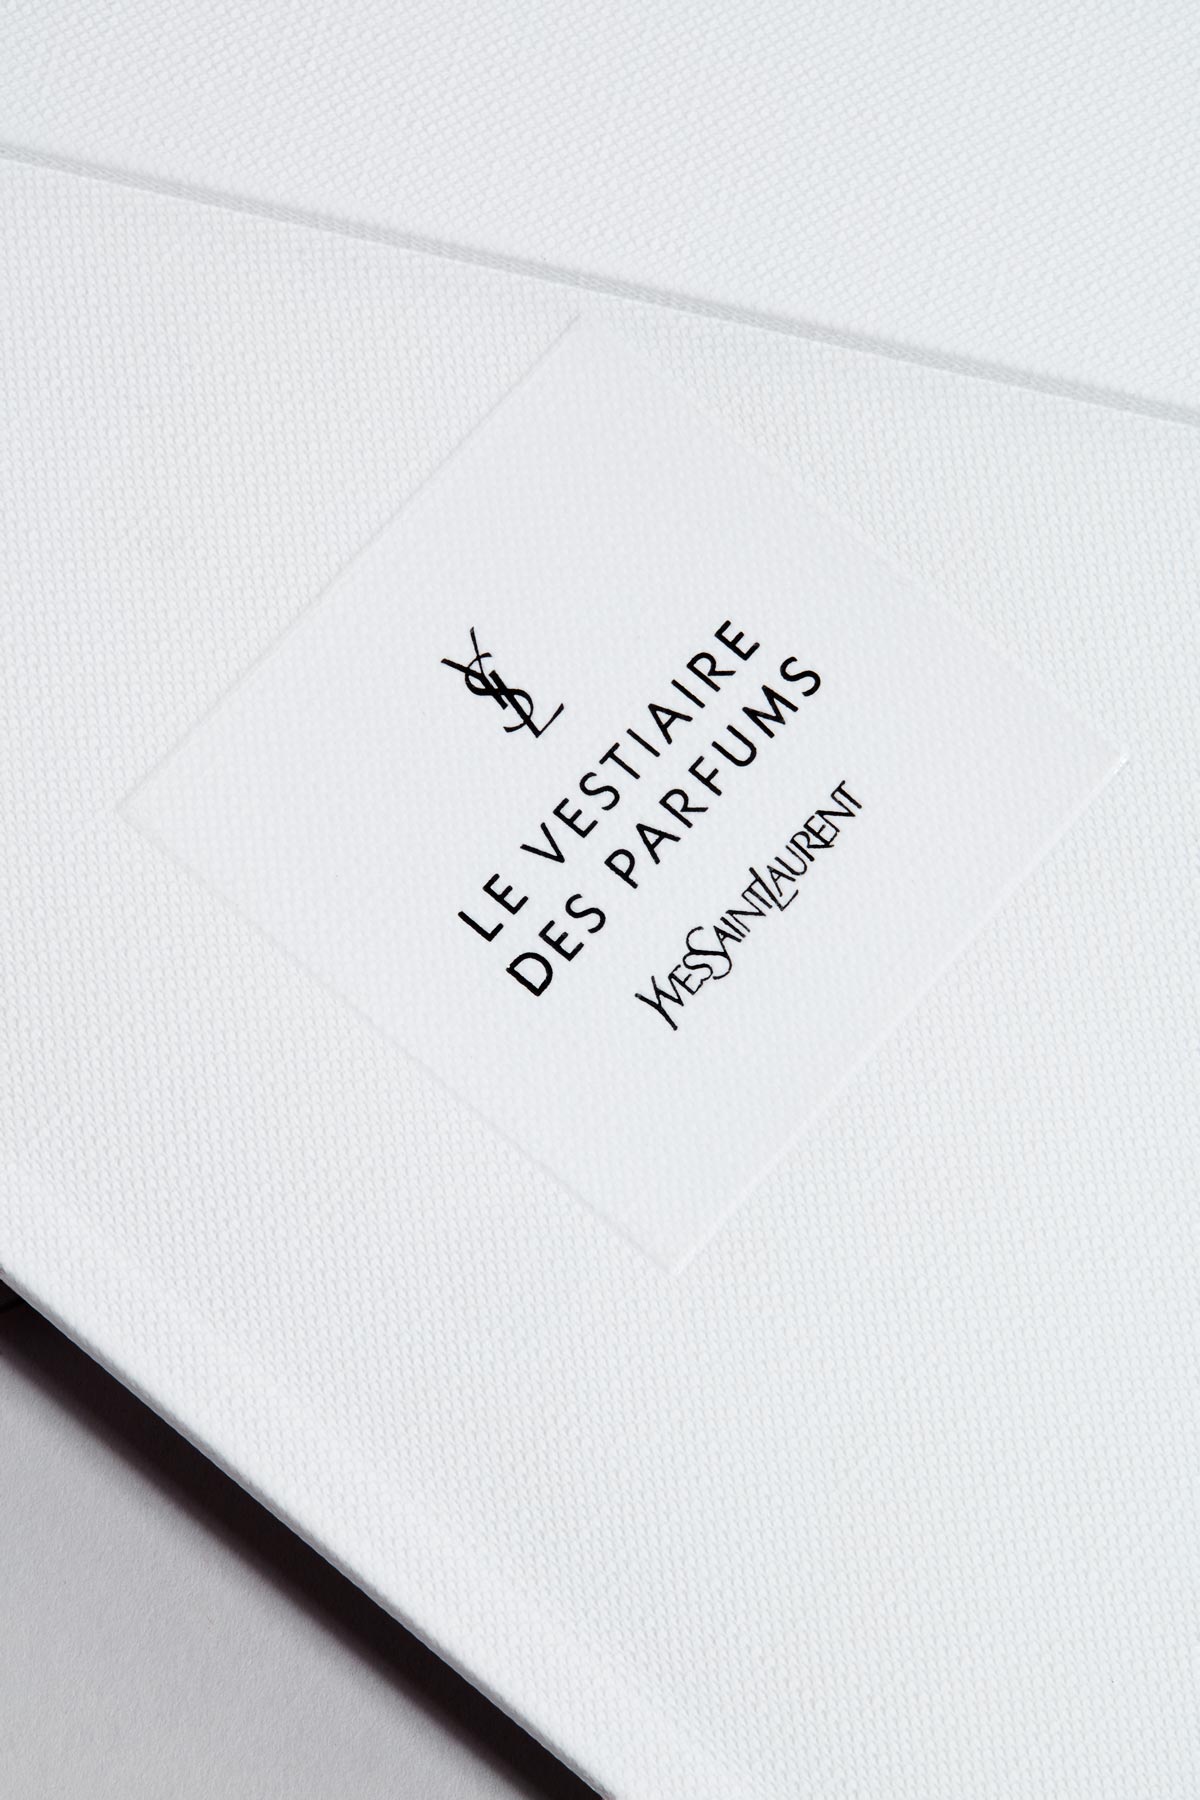 Yves Saint Laurent / YSL Parfums – Fragrance logo – Packaging detail